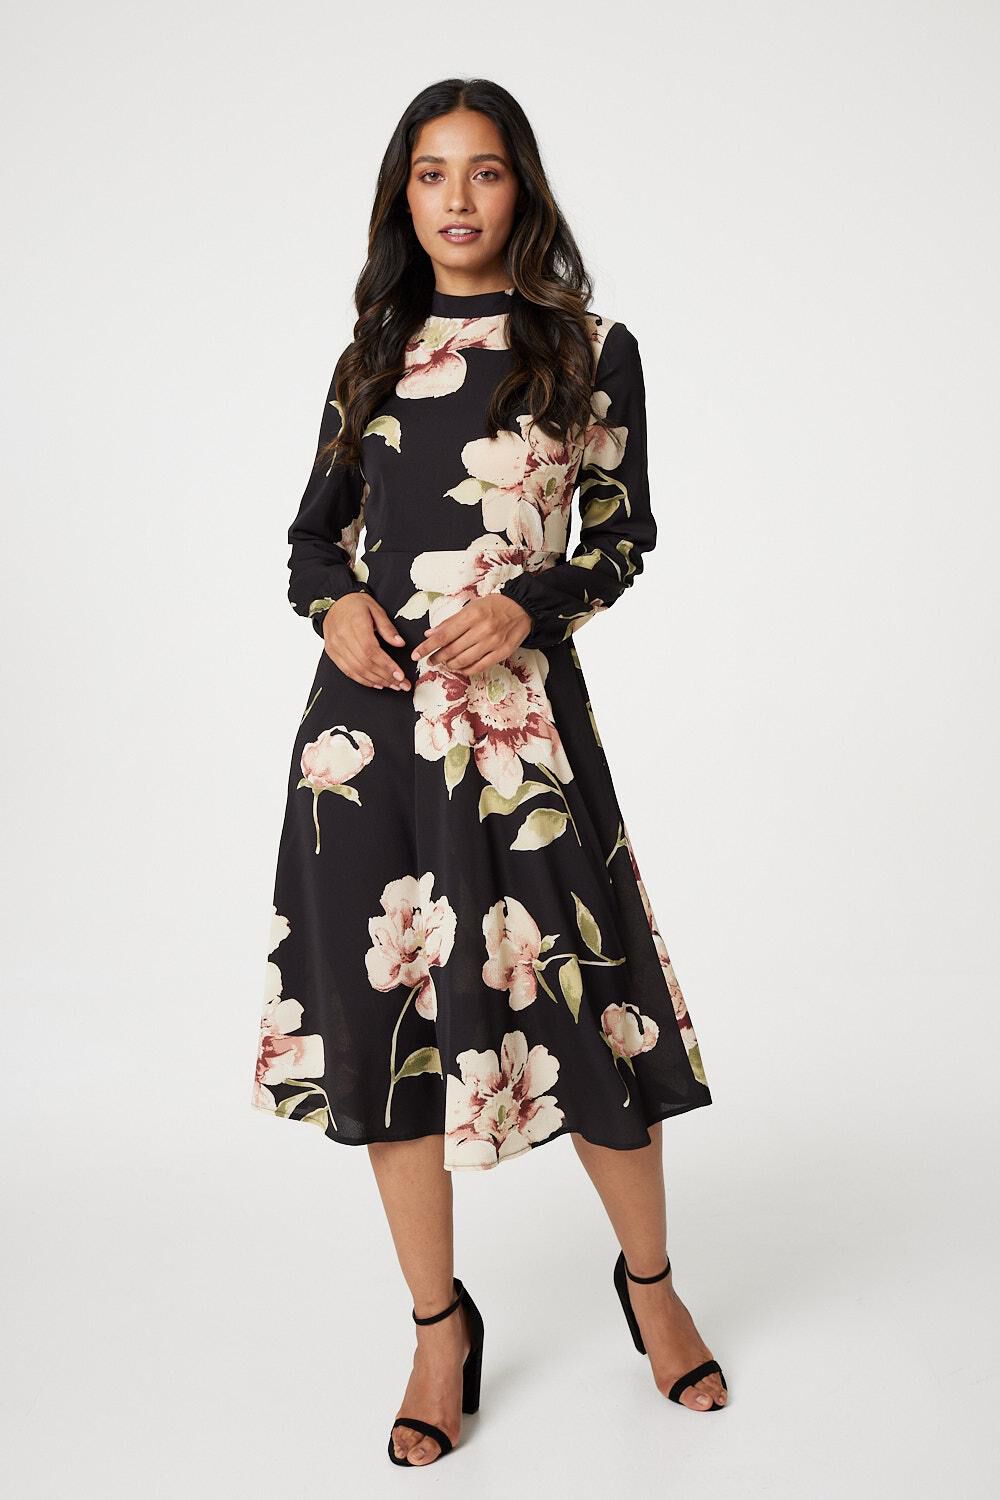 Izabel London Women’s Black and Beige Floral Print Long Sleeve Midi Tea Dress, Size: 14